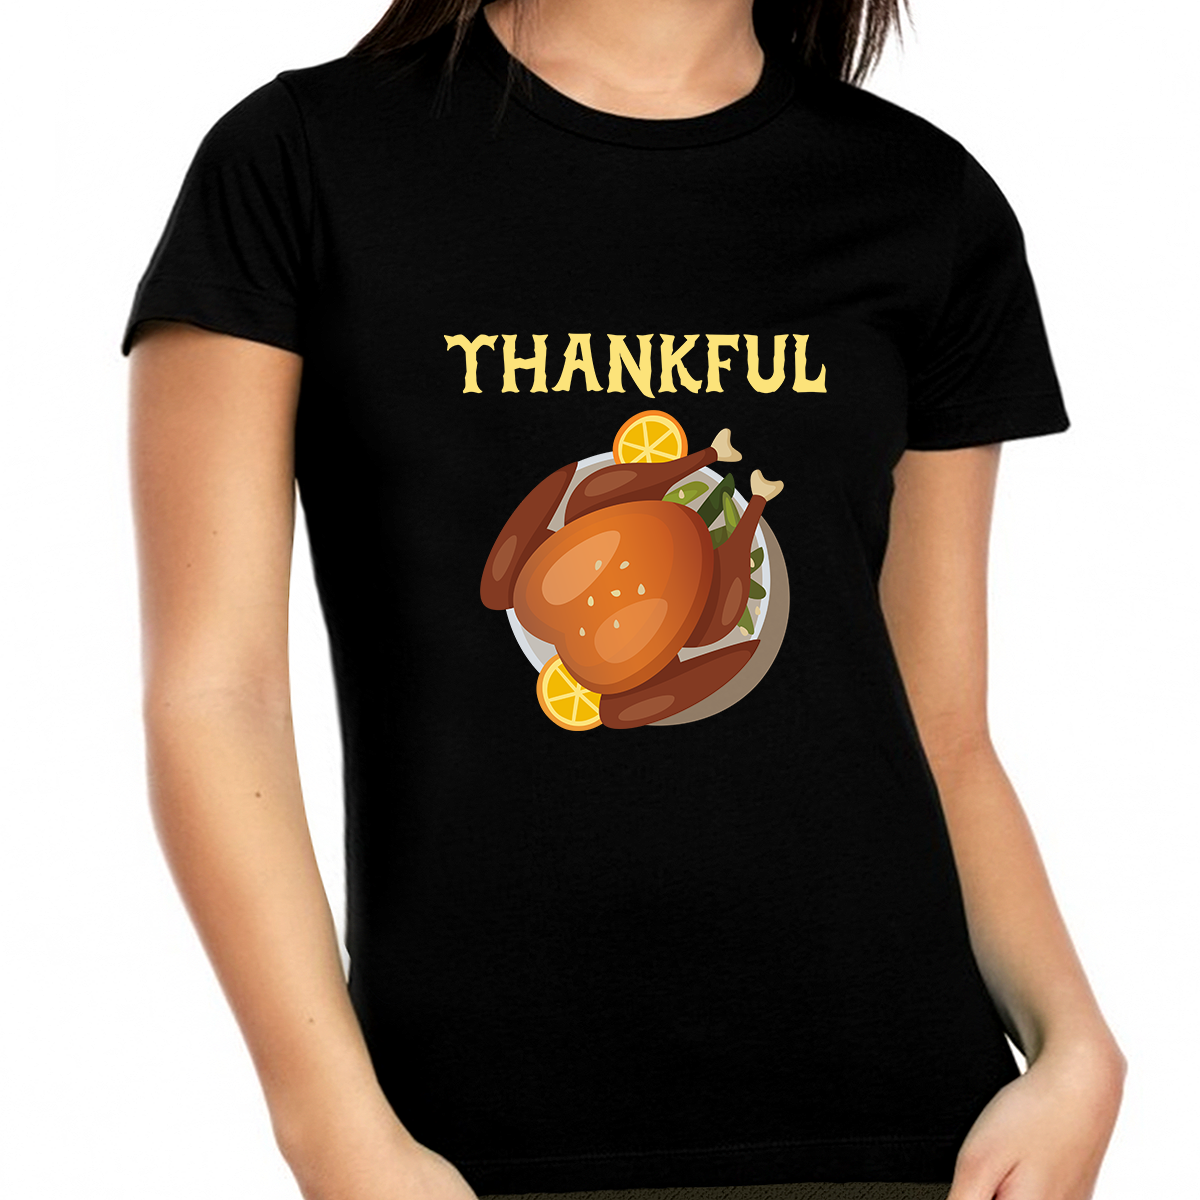 Plus Size Thanksgiving Shirts for Women 1X 2X 3X 4X 5X Thanksgiving Outfit Thanksgiving Family Dinner Shirt